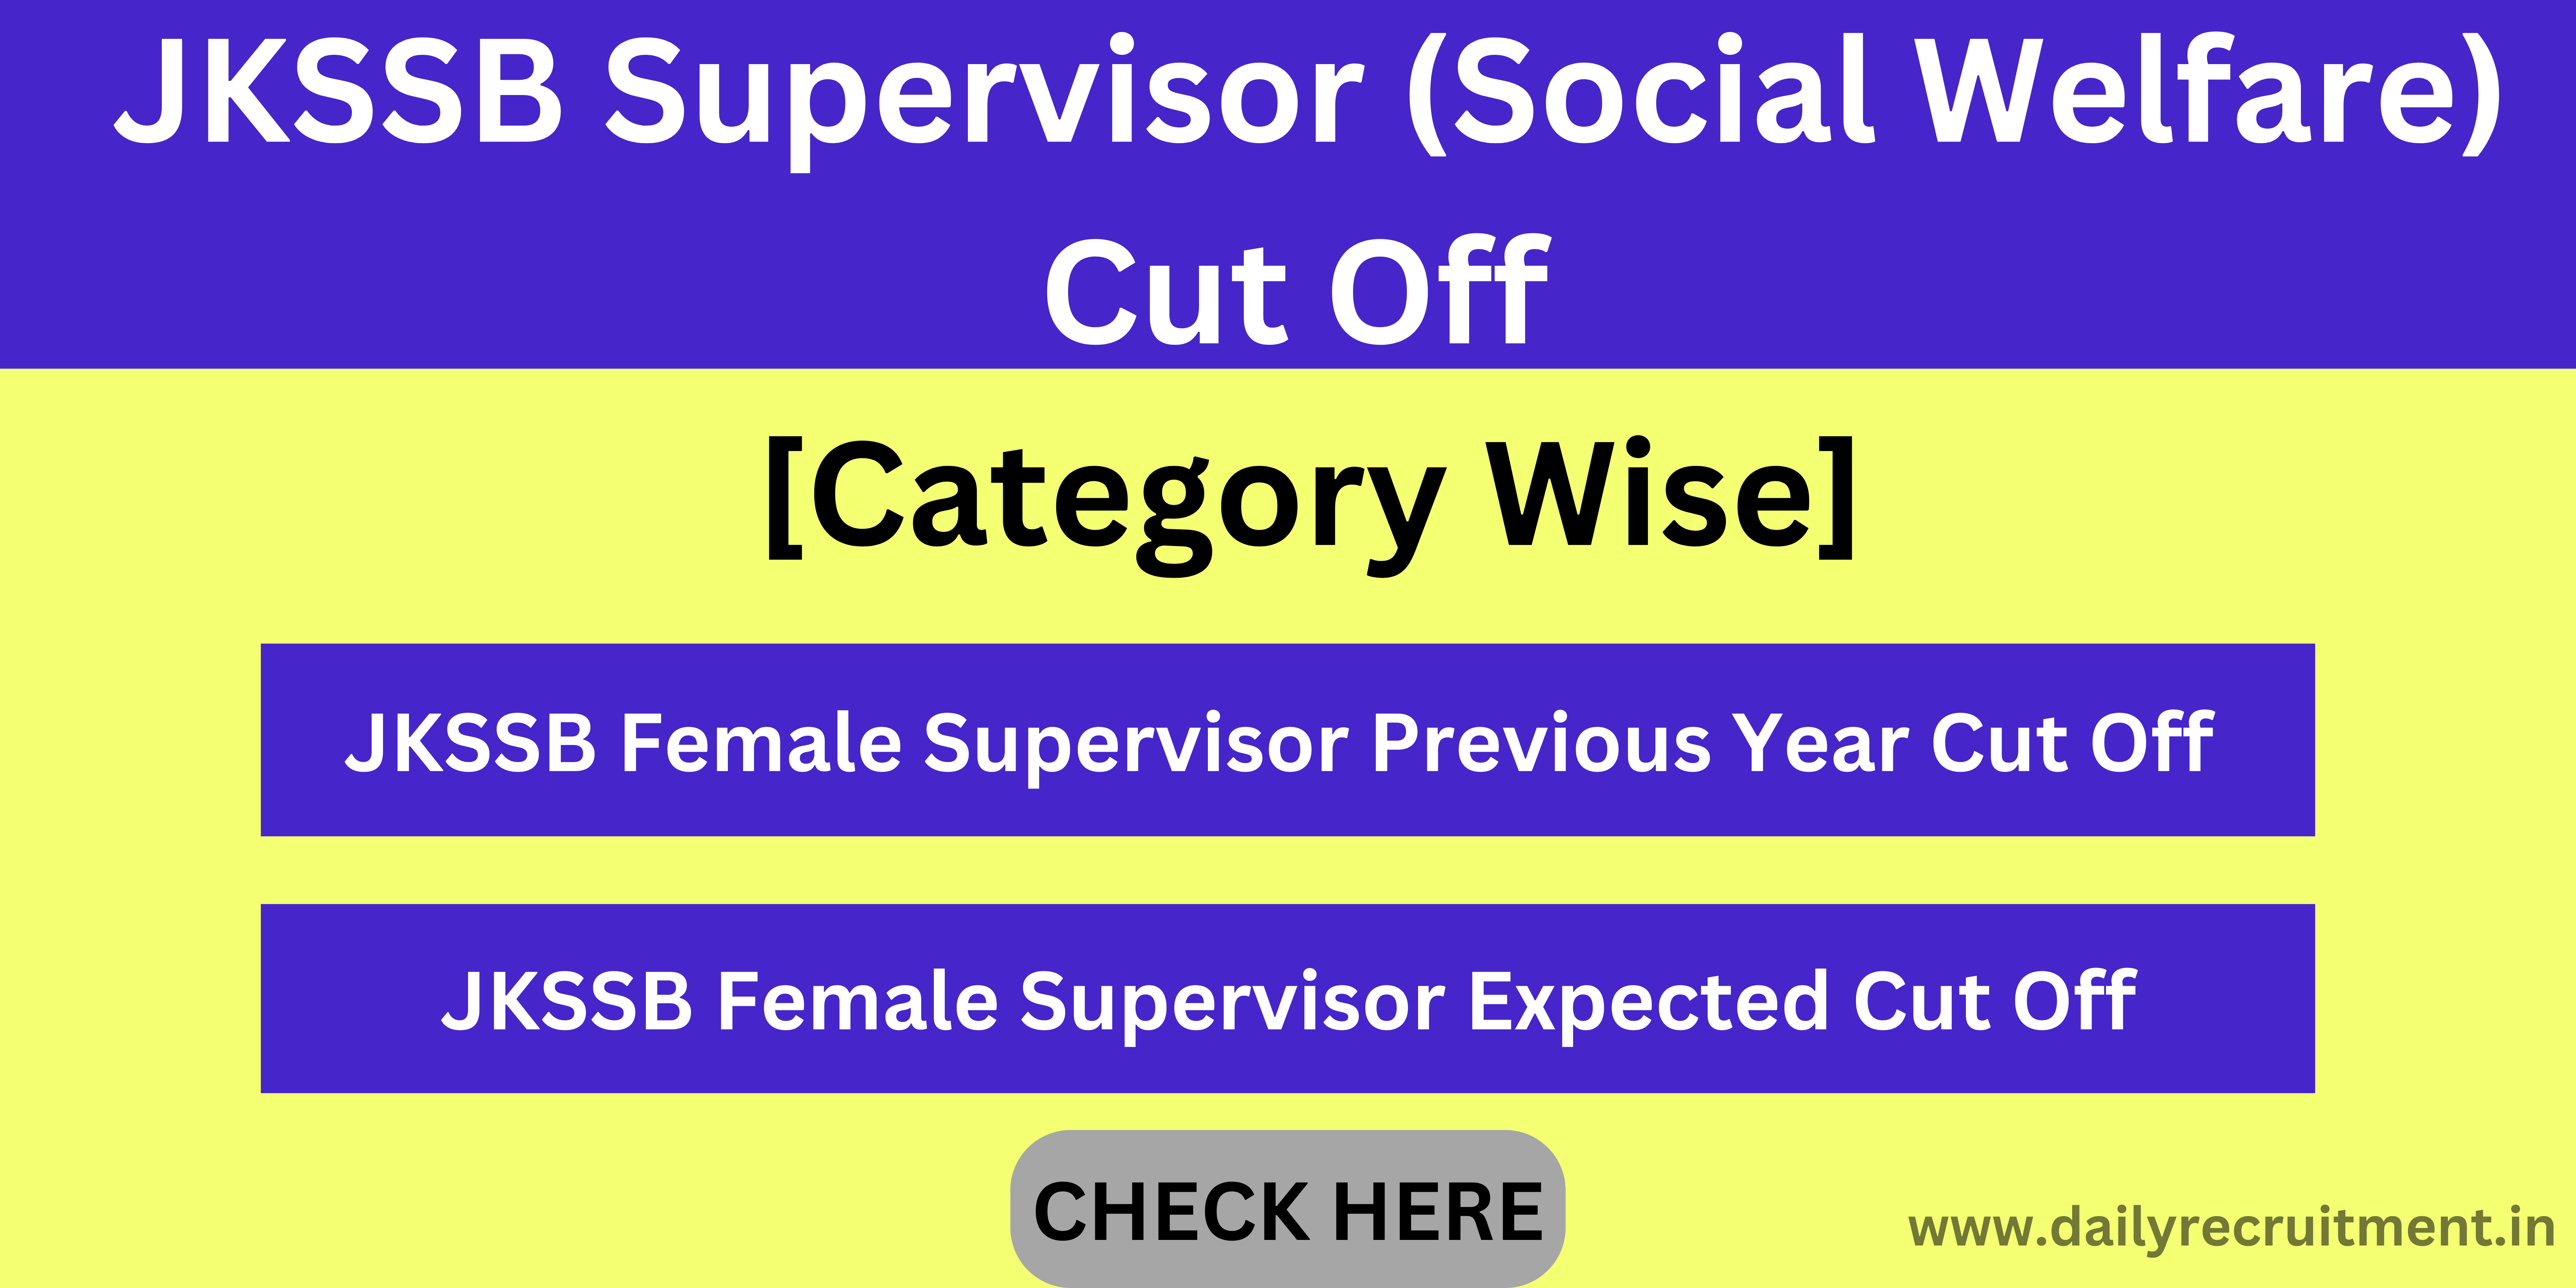 JKSSB Supervisor (Social Welfare) Cut Off